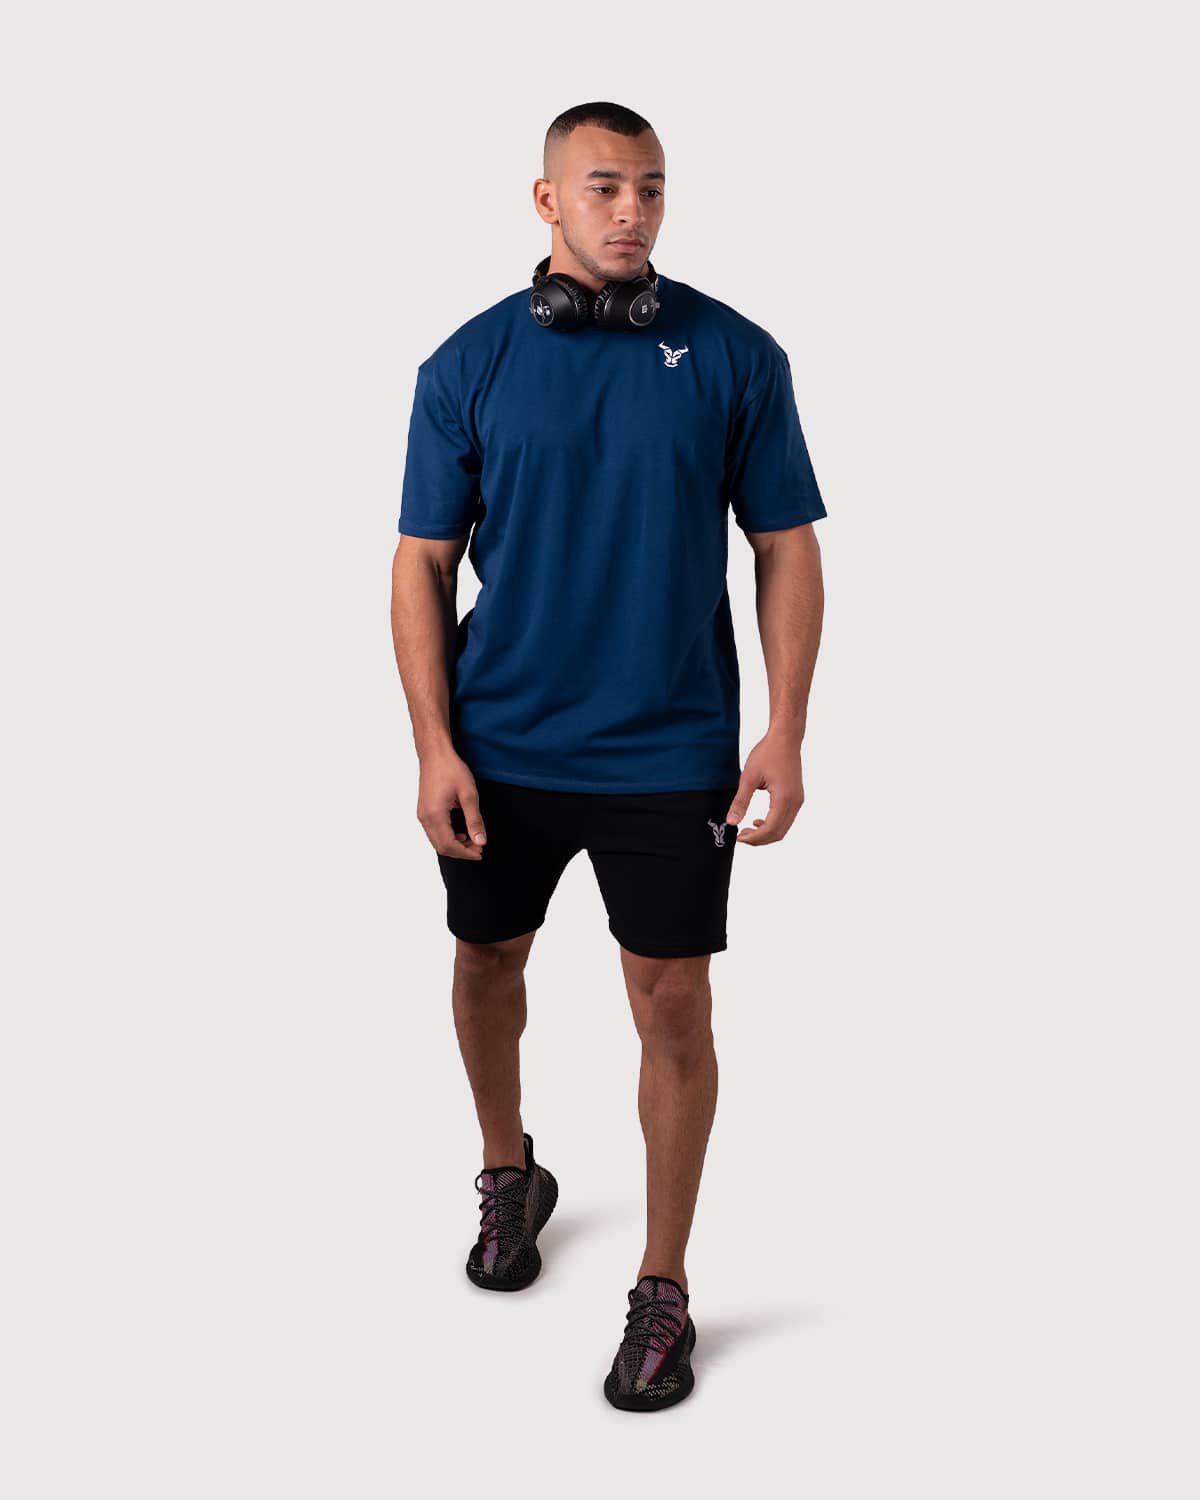 Essential T-shirt oversize - Marine 